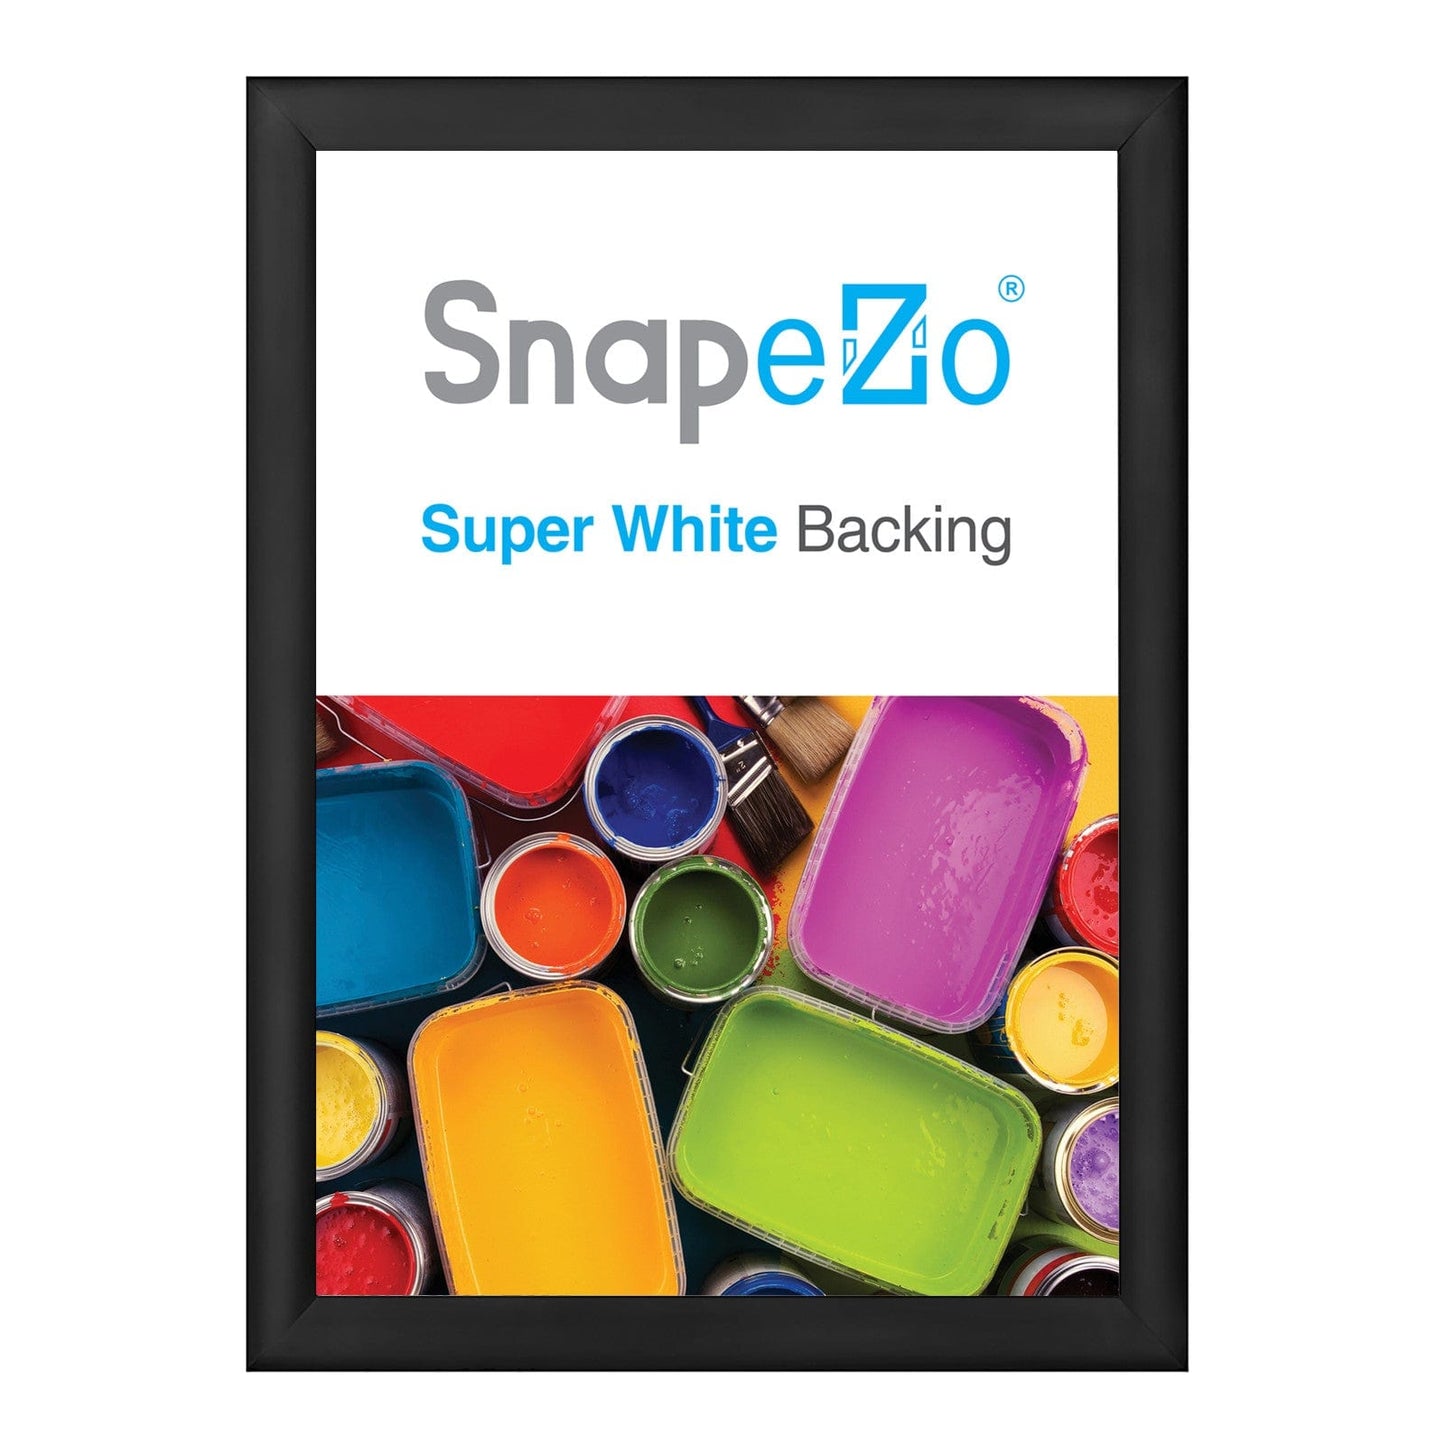 27x39 Black SnapeZo® Snap Frame - 1.2" Profile - Snap Frames Direct